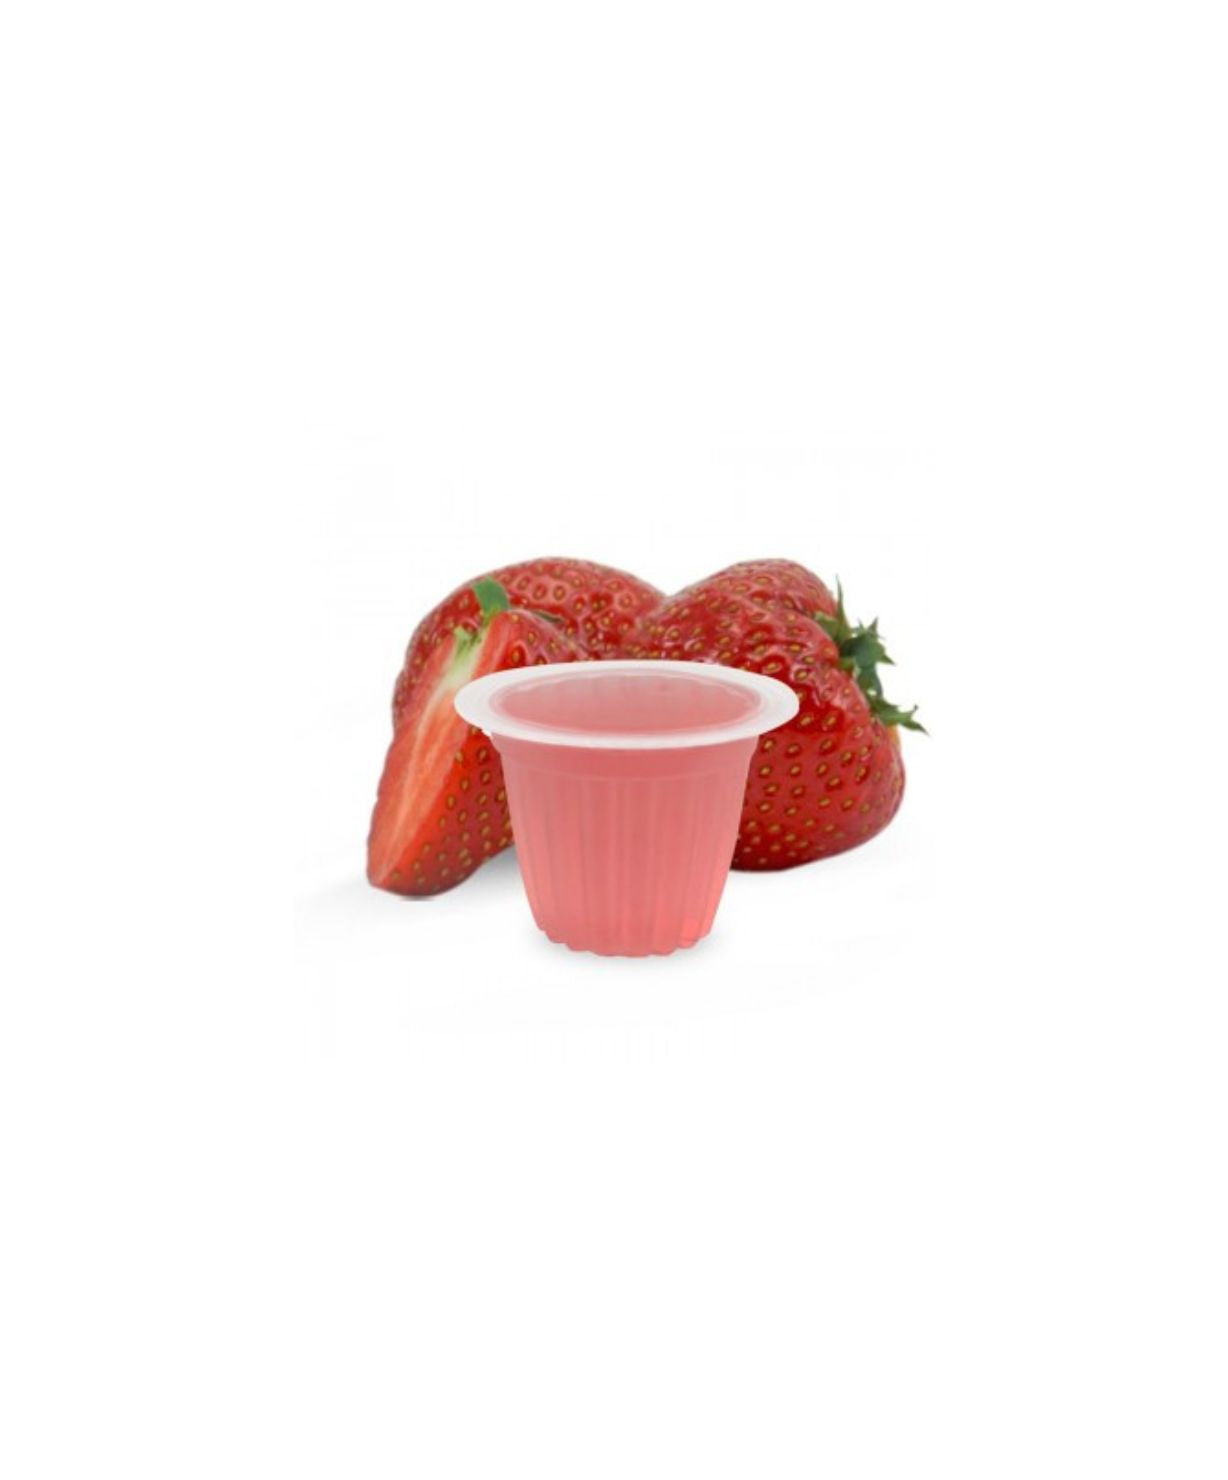 Fruit cups